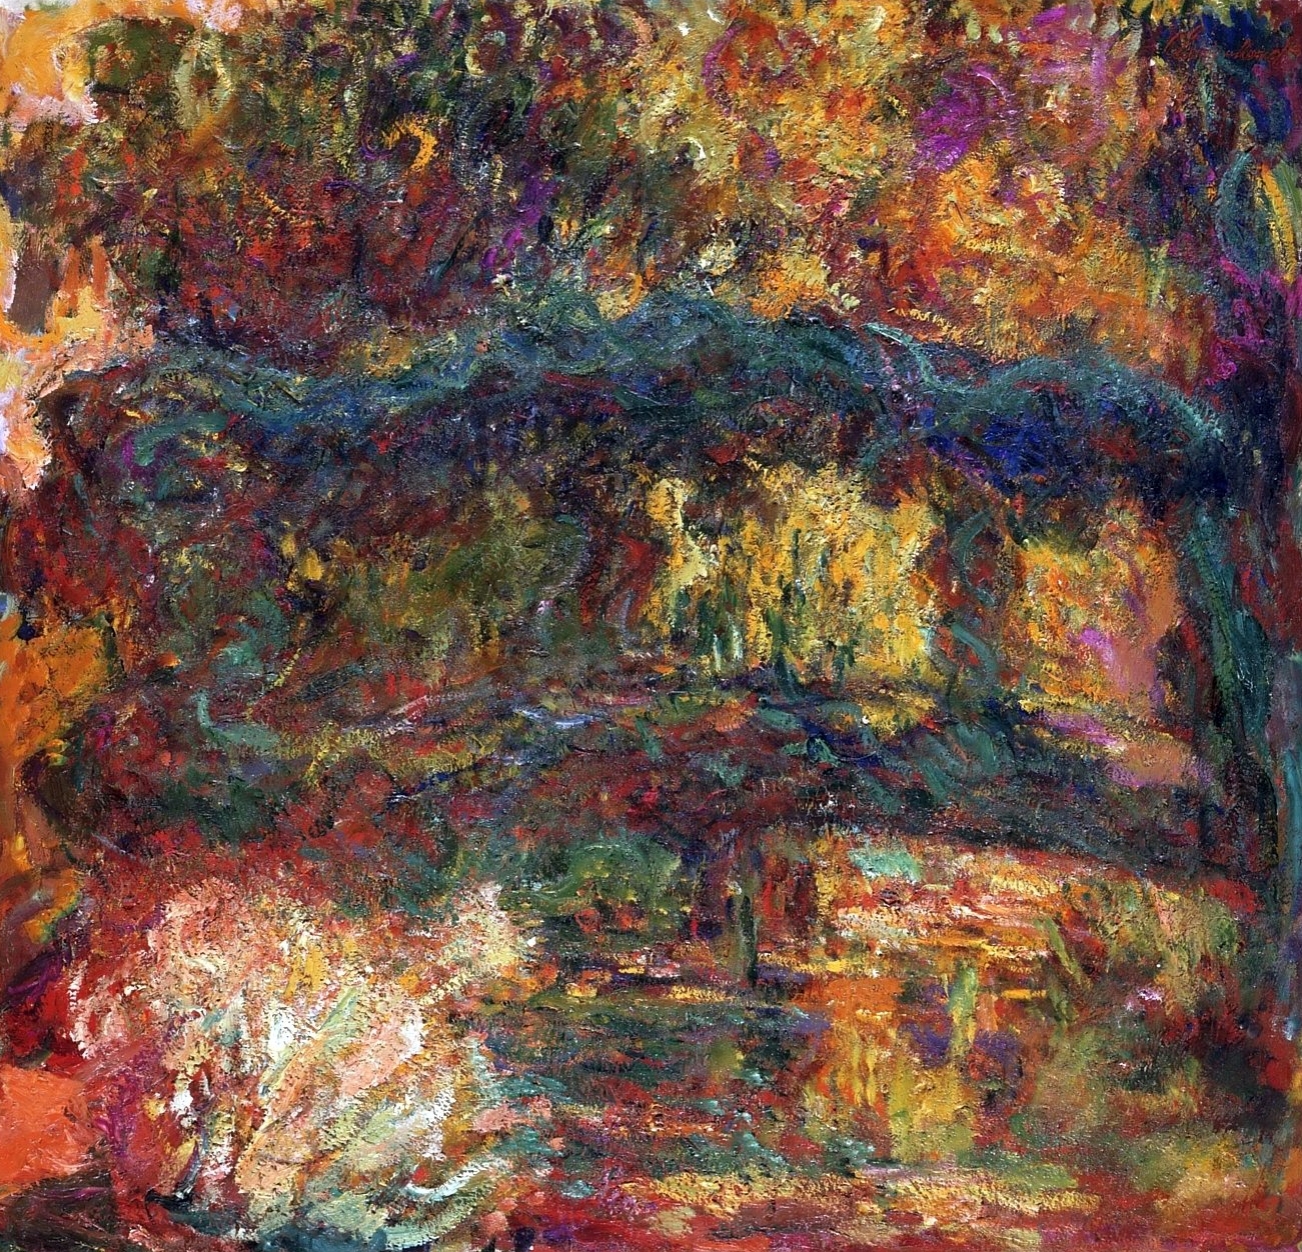 Claude+Monet-1840-1926 (466).jpg